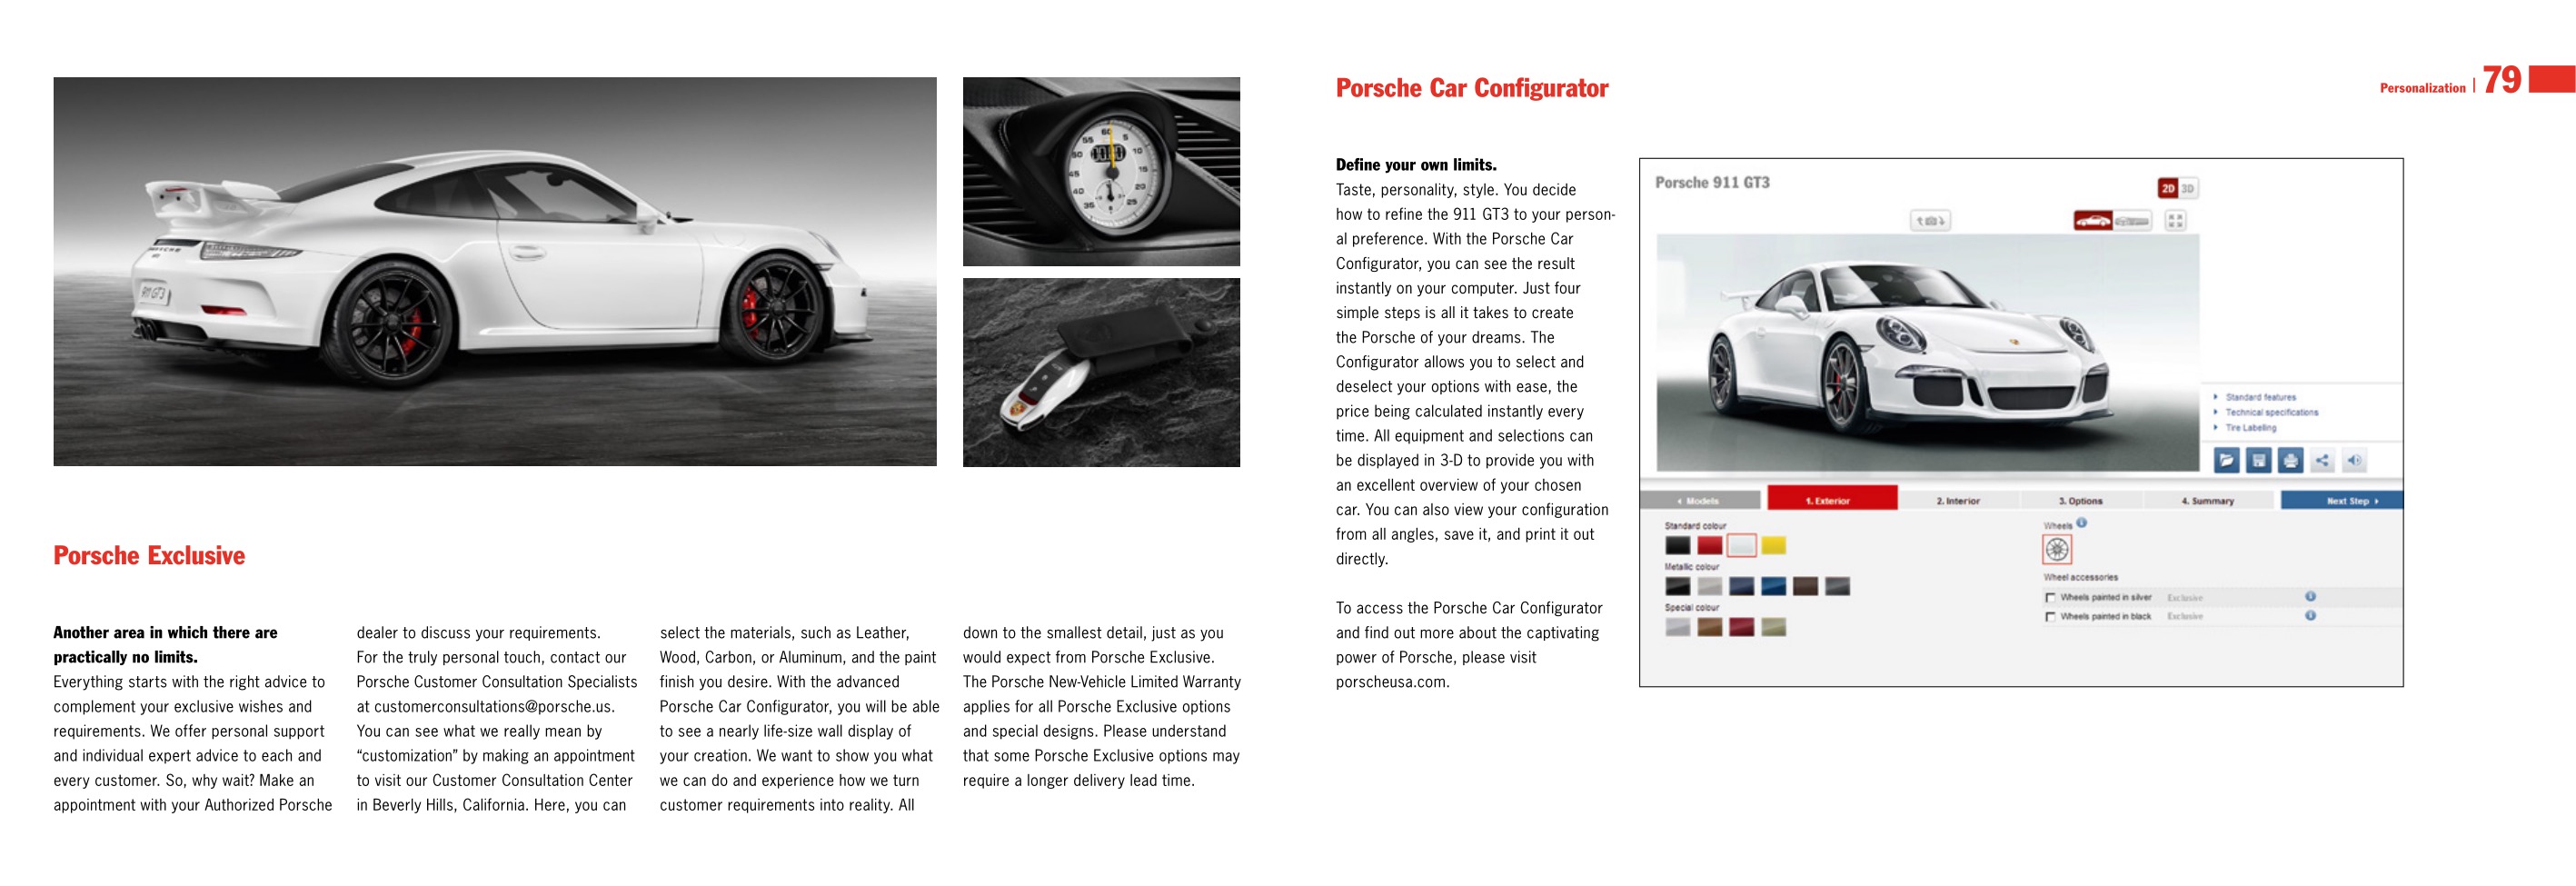 2014 Porsche 911 GT3 Brochure Page 39